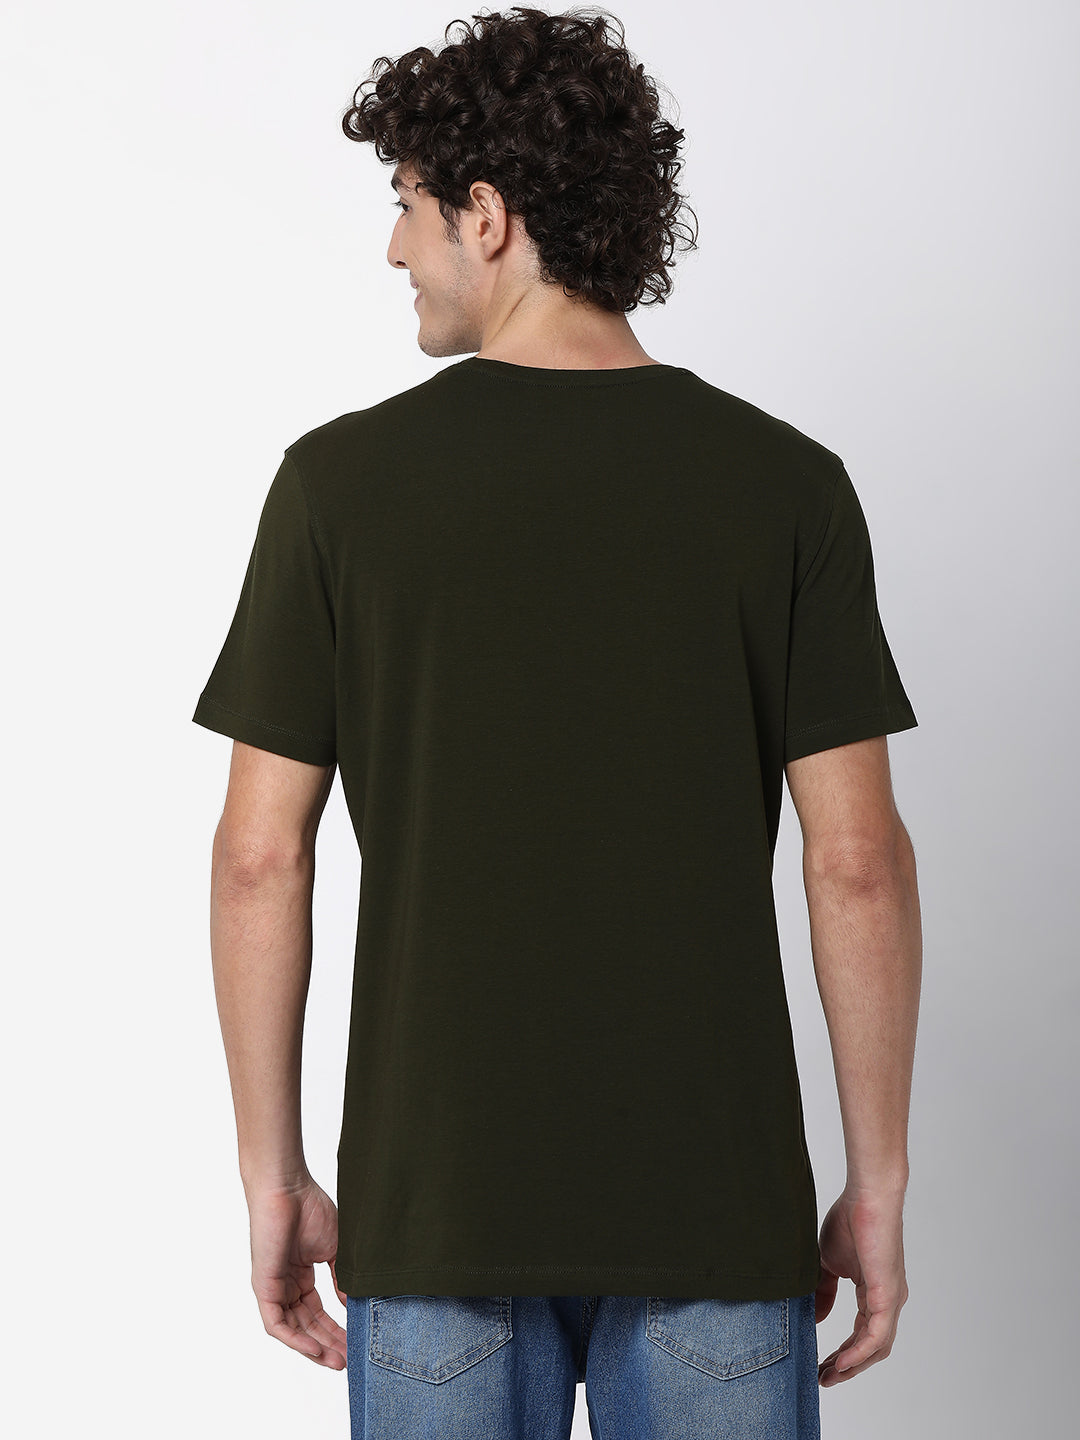 Spykar Rifle Green Cotton Half Sleeve Printed Casual T-shirt For Men